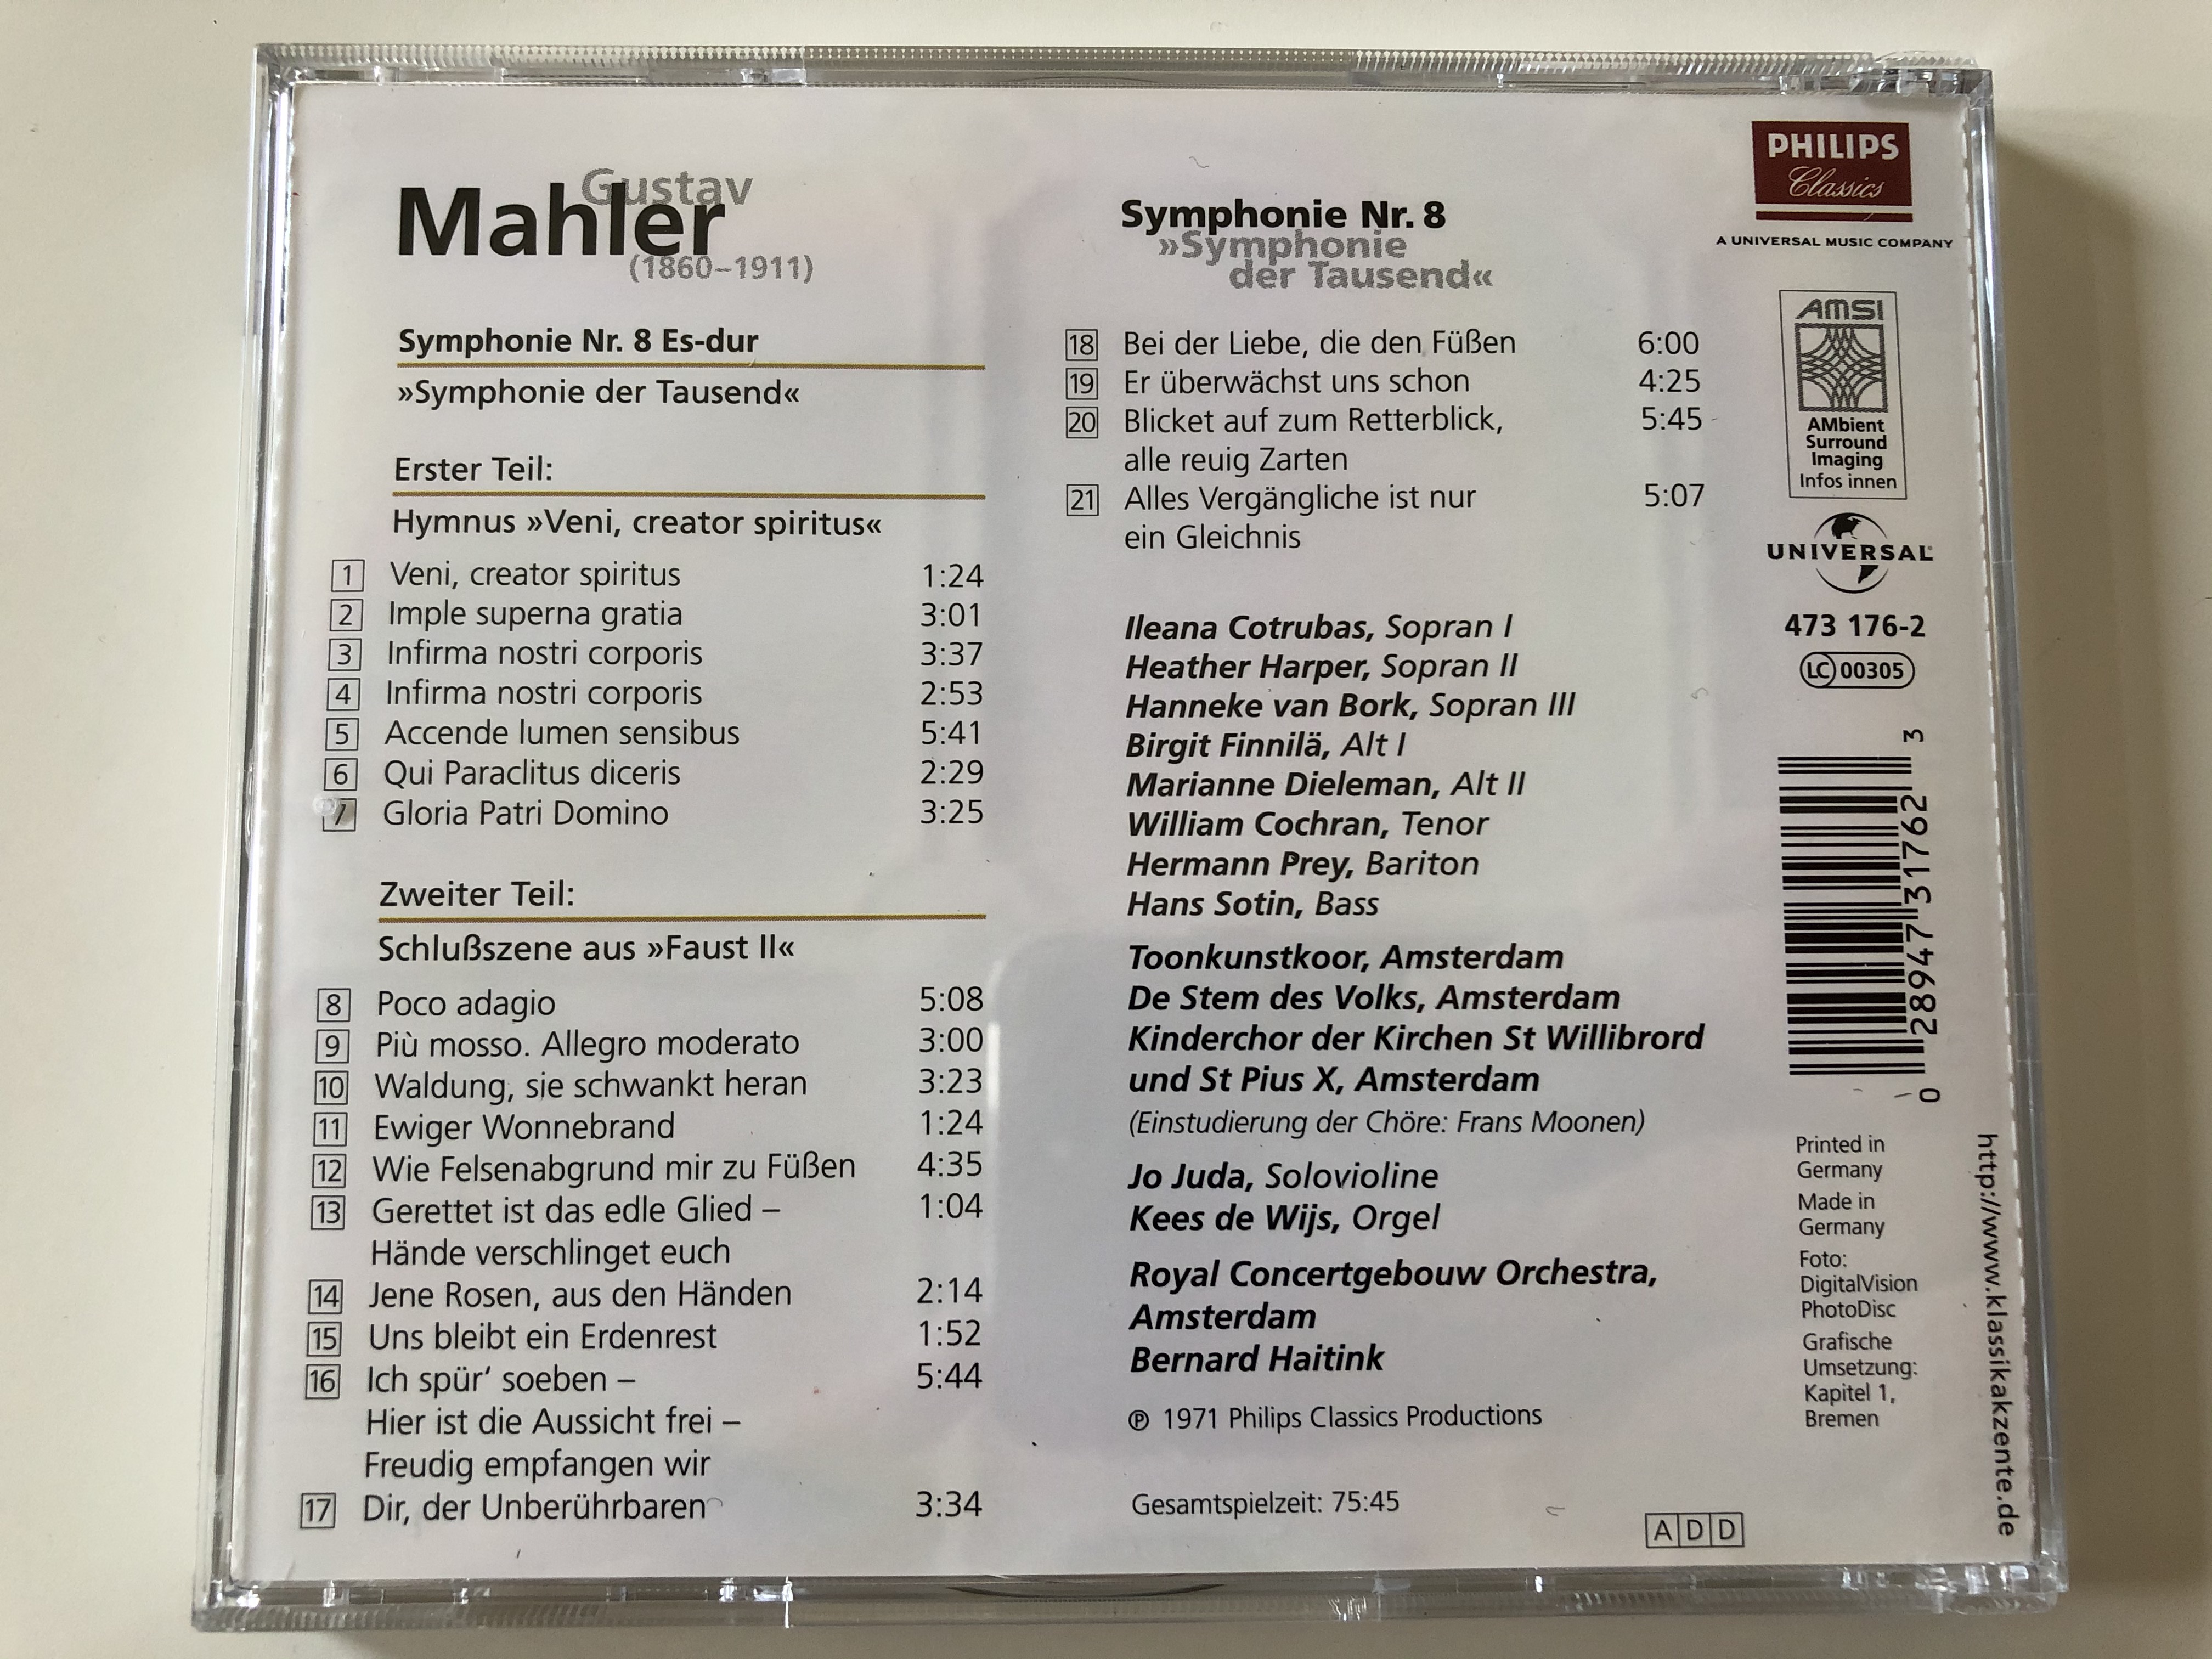 gustav-mahler-symphonie-nr.-8-symphonie-der-tausend-contrubas-finnila-cochran-prey-sotin-royal-concertgebouw-orchestra-bernard-haitink-philips-classics-audio-cd-473-176-2-5-.jpg